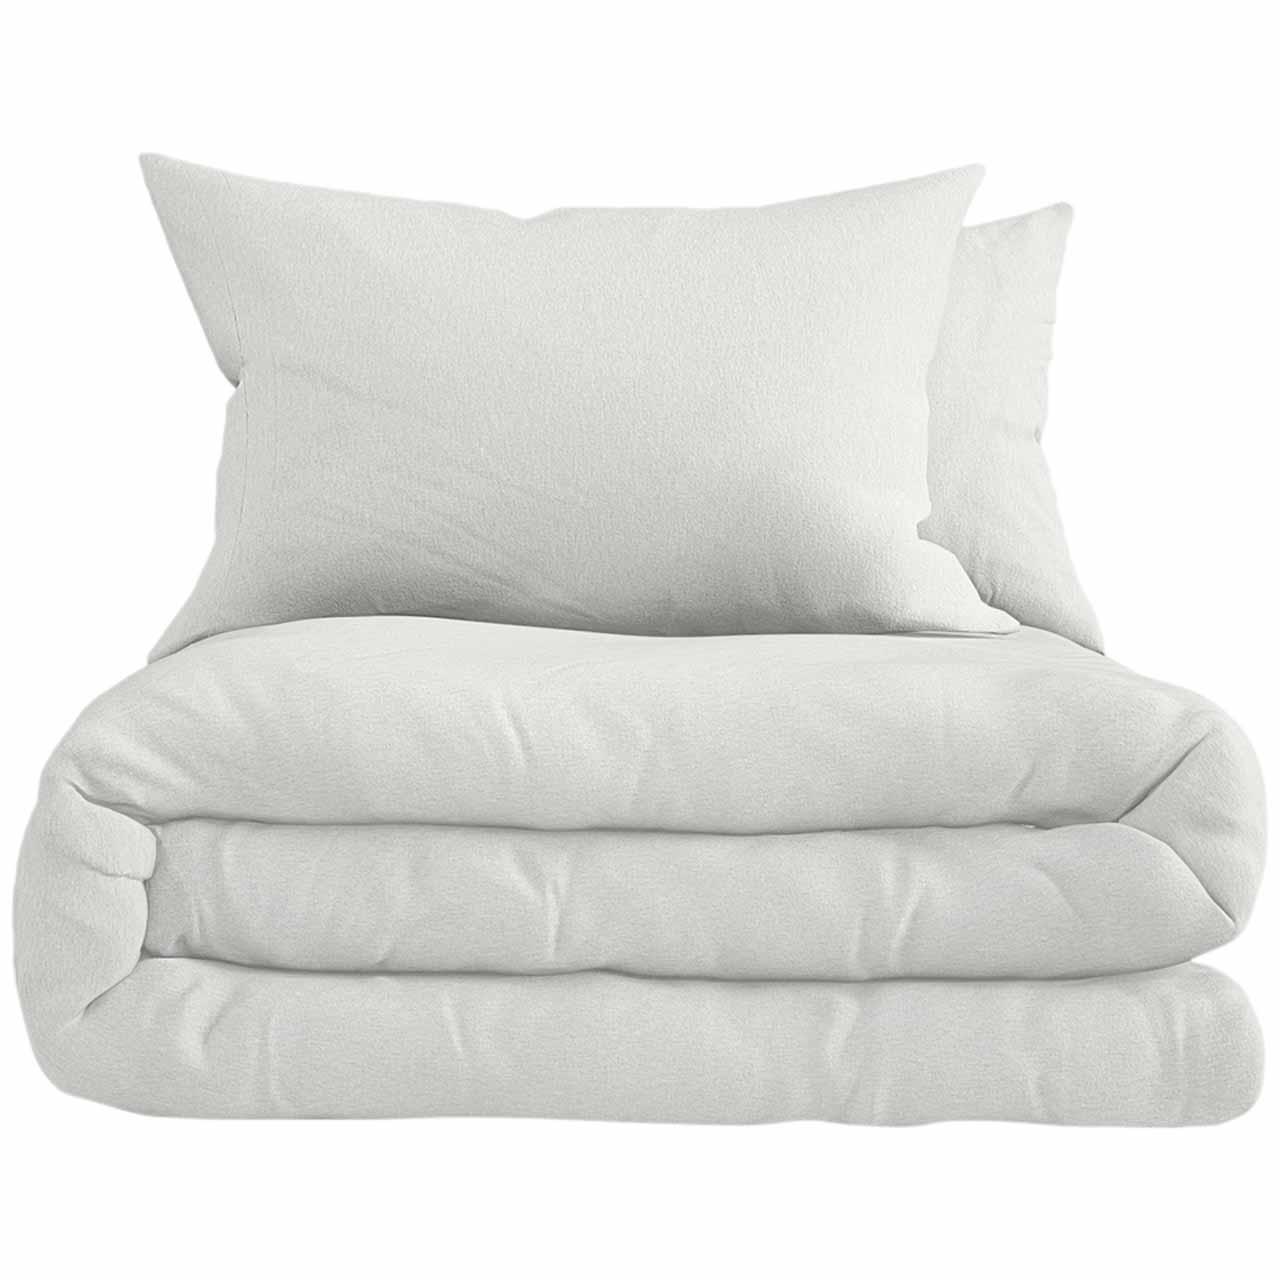 M&S Pure Brushed Cotton Bedding Set, Single, White